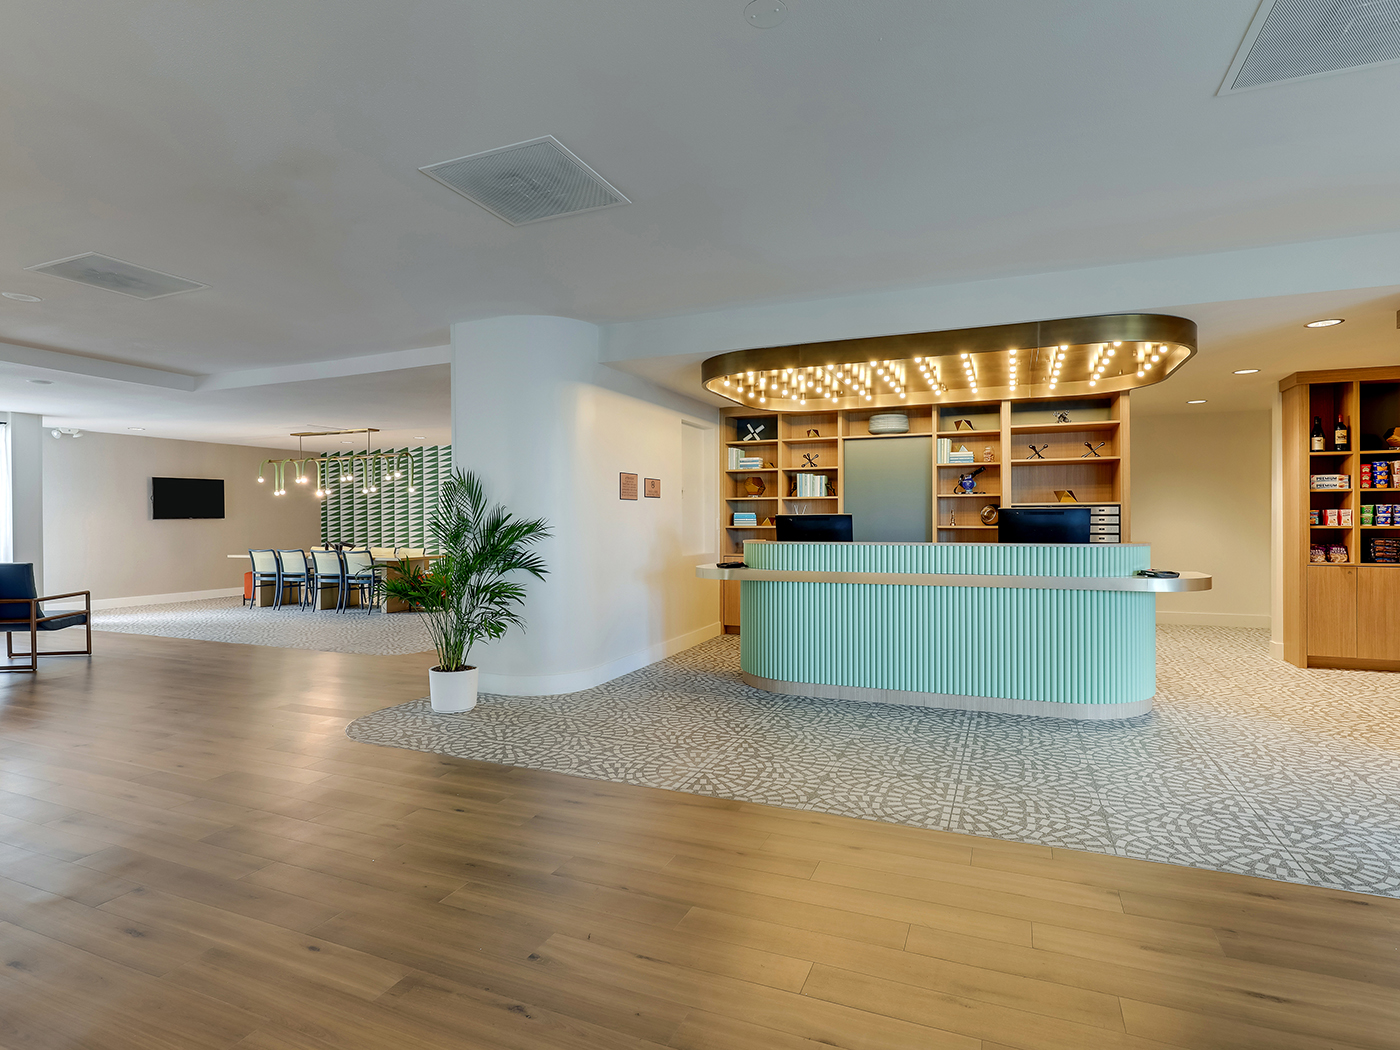 Sonesta Select Scottsdale Mayo Clinic Front desk lobby area